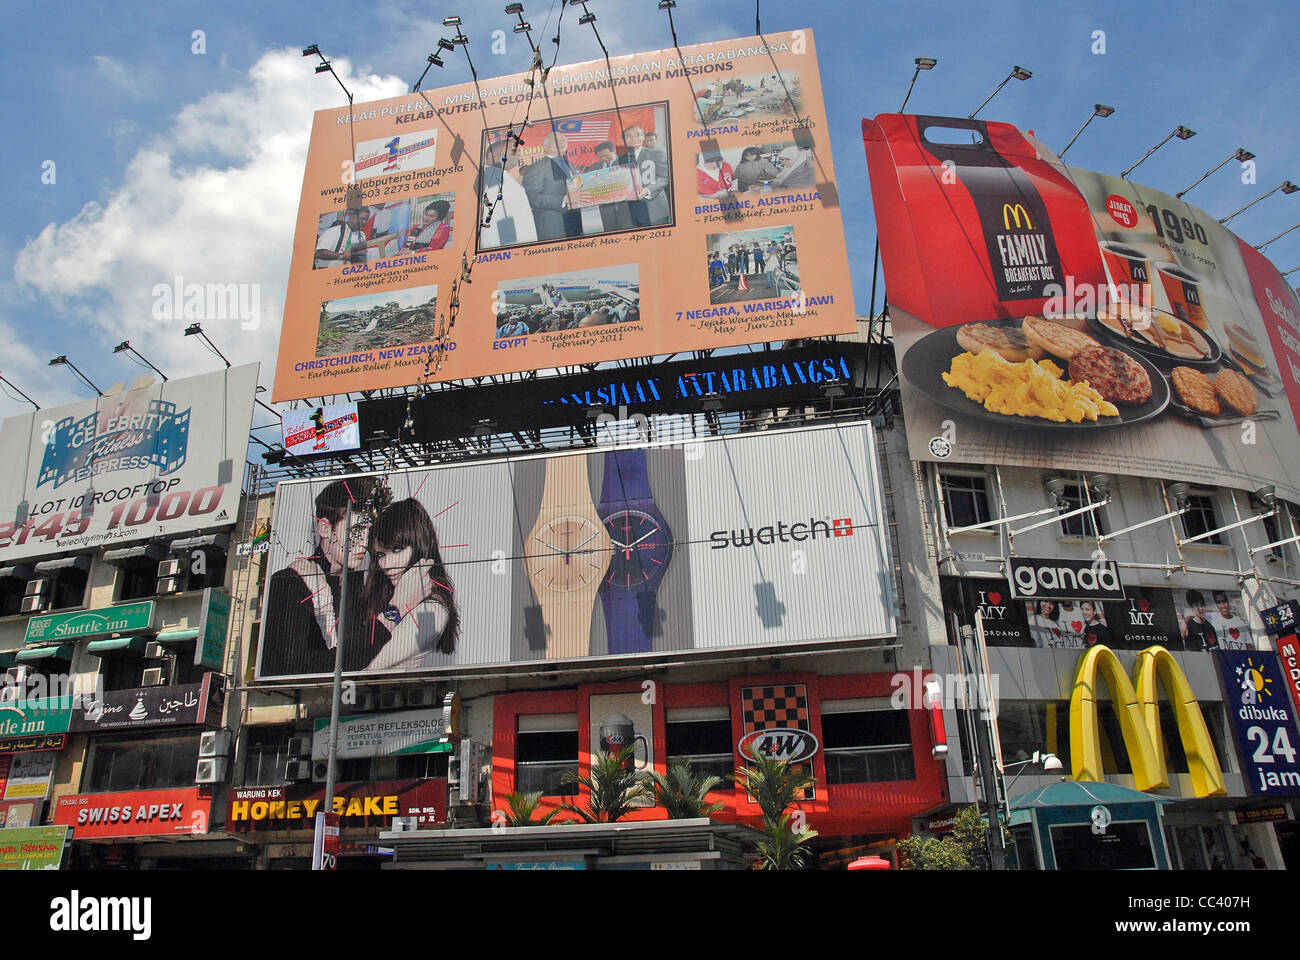 Straßenszene Jalan Bukit Bintang Kuala Lumpur Malaysia Stockfoto